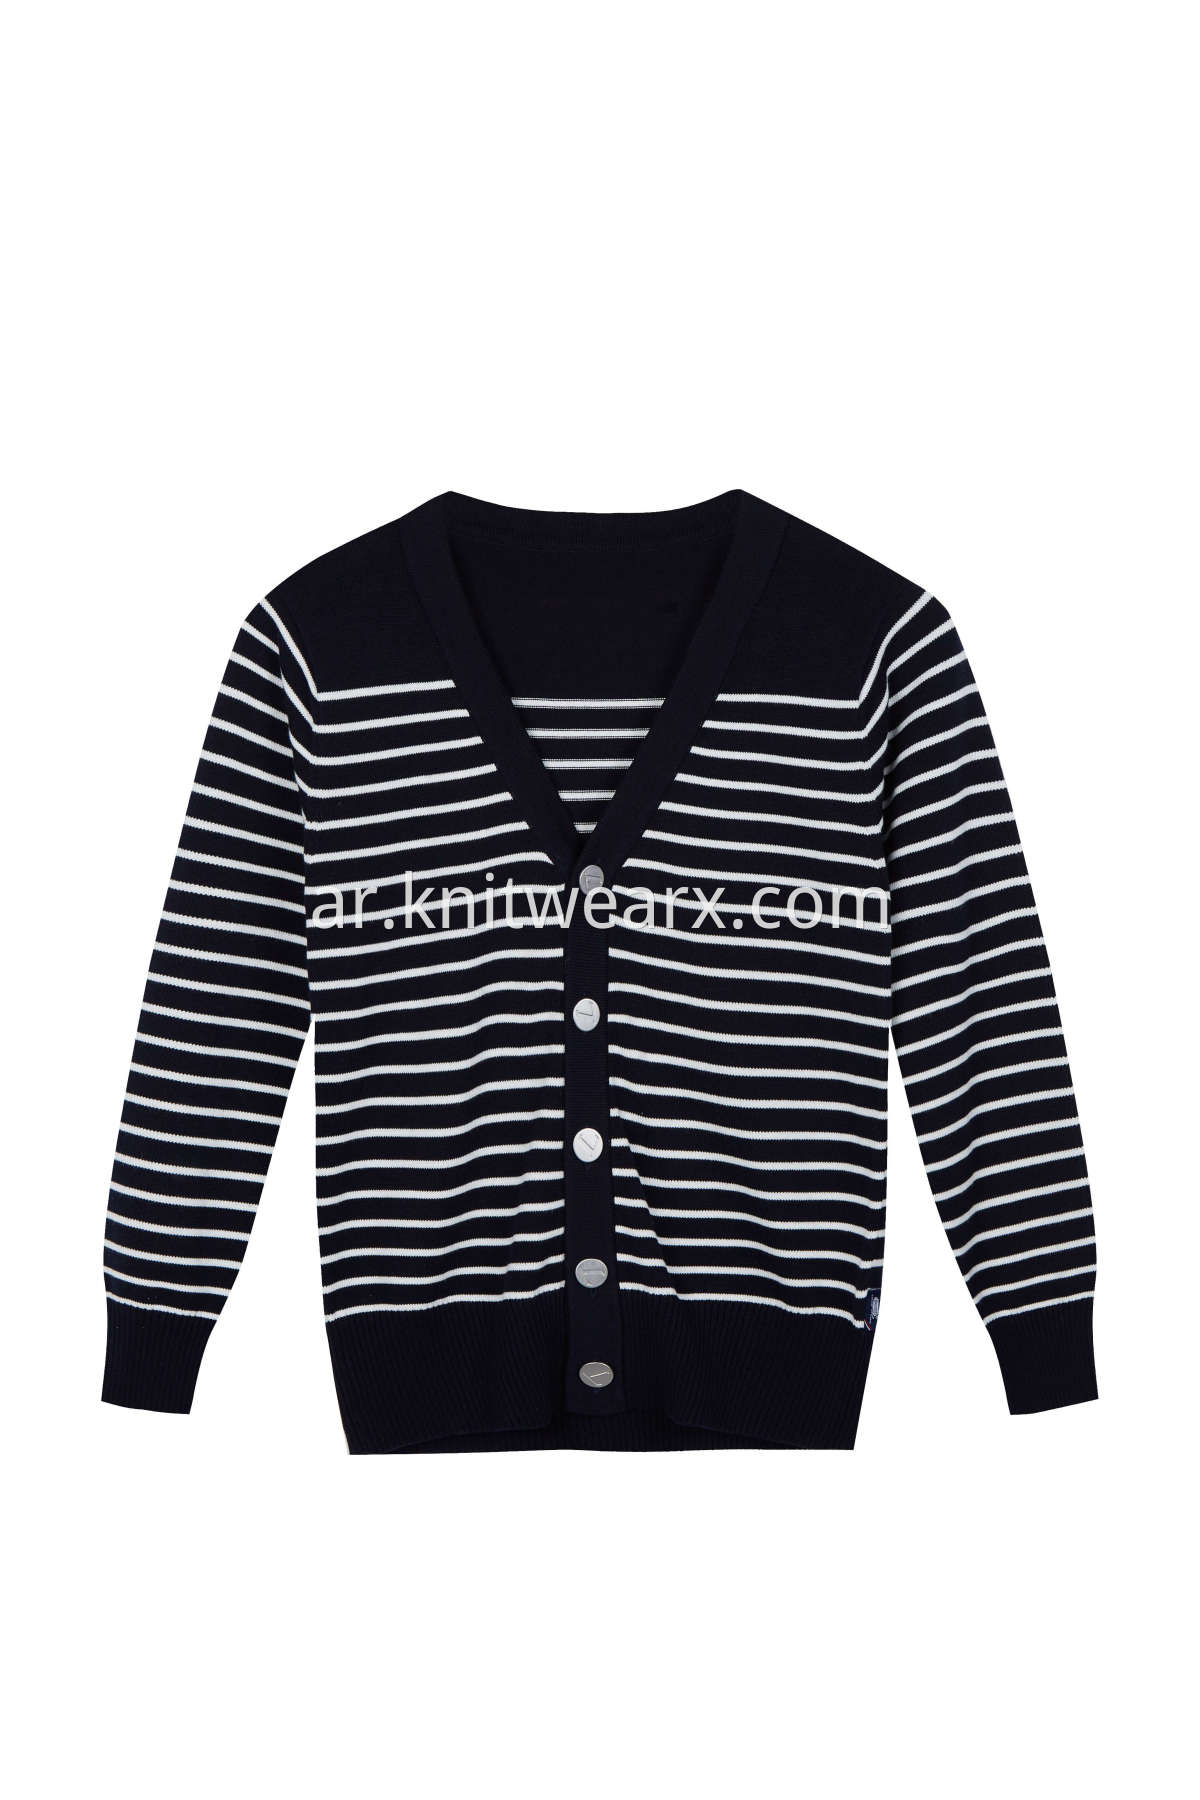 Boy's Sweater Stripe Vest Cotton V-Neck School Uniform Button Cardigan